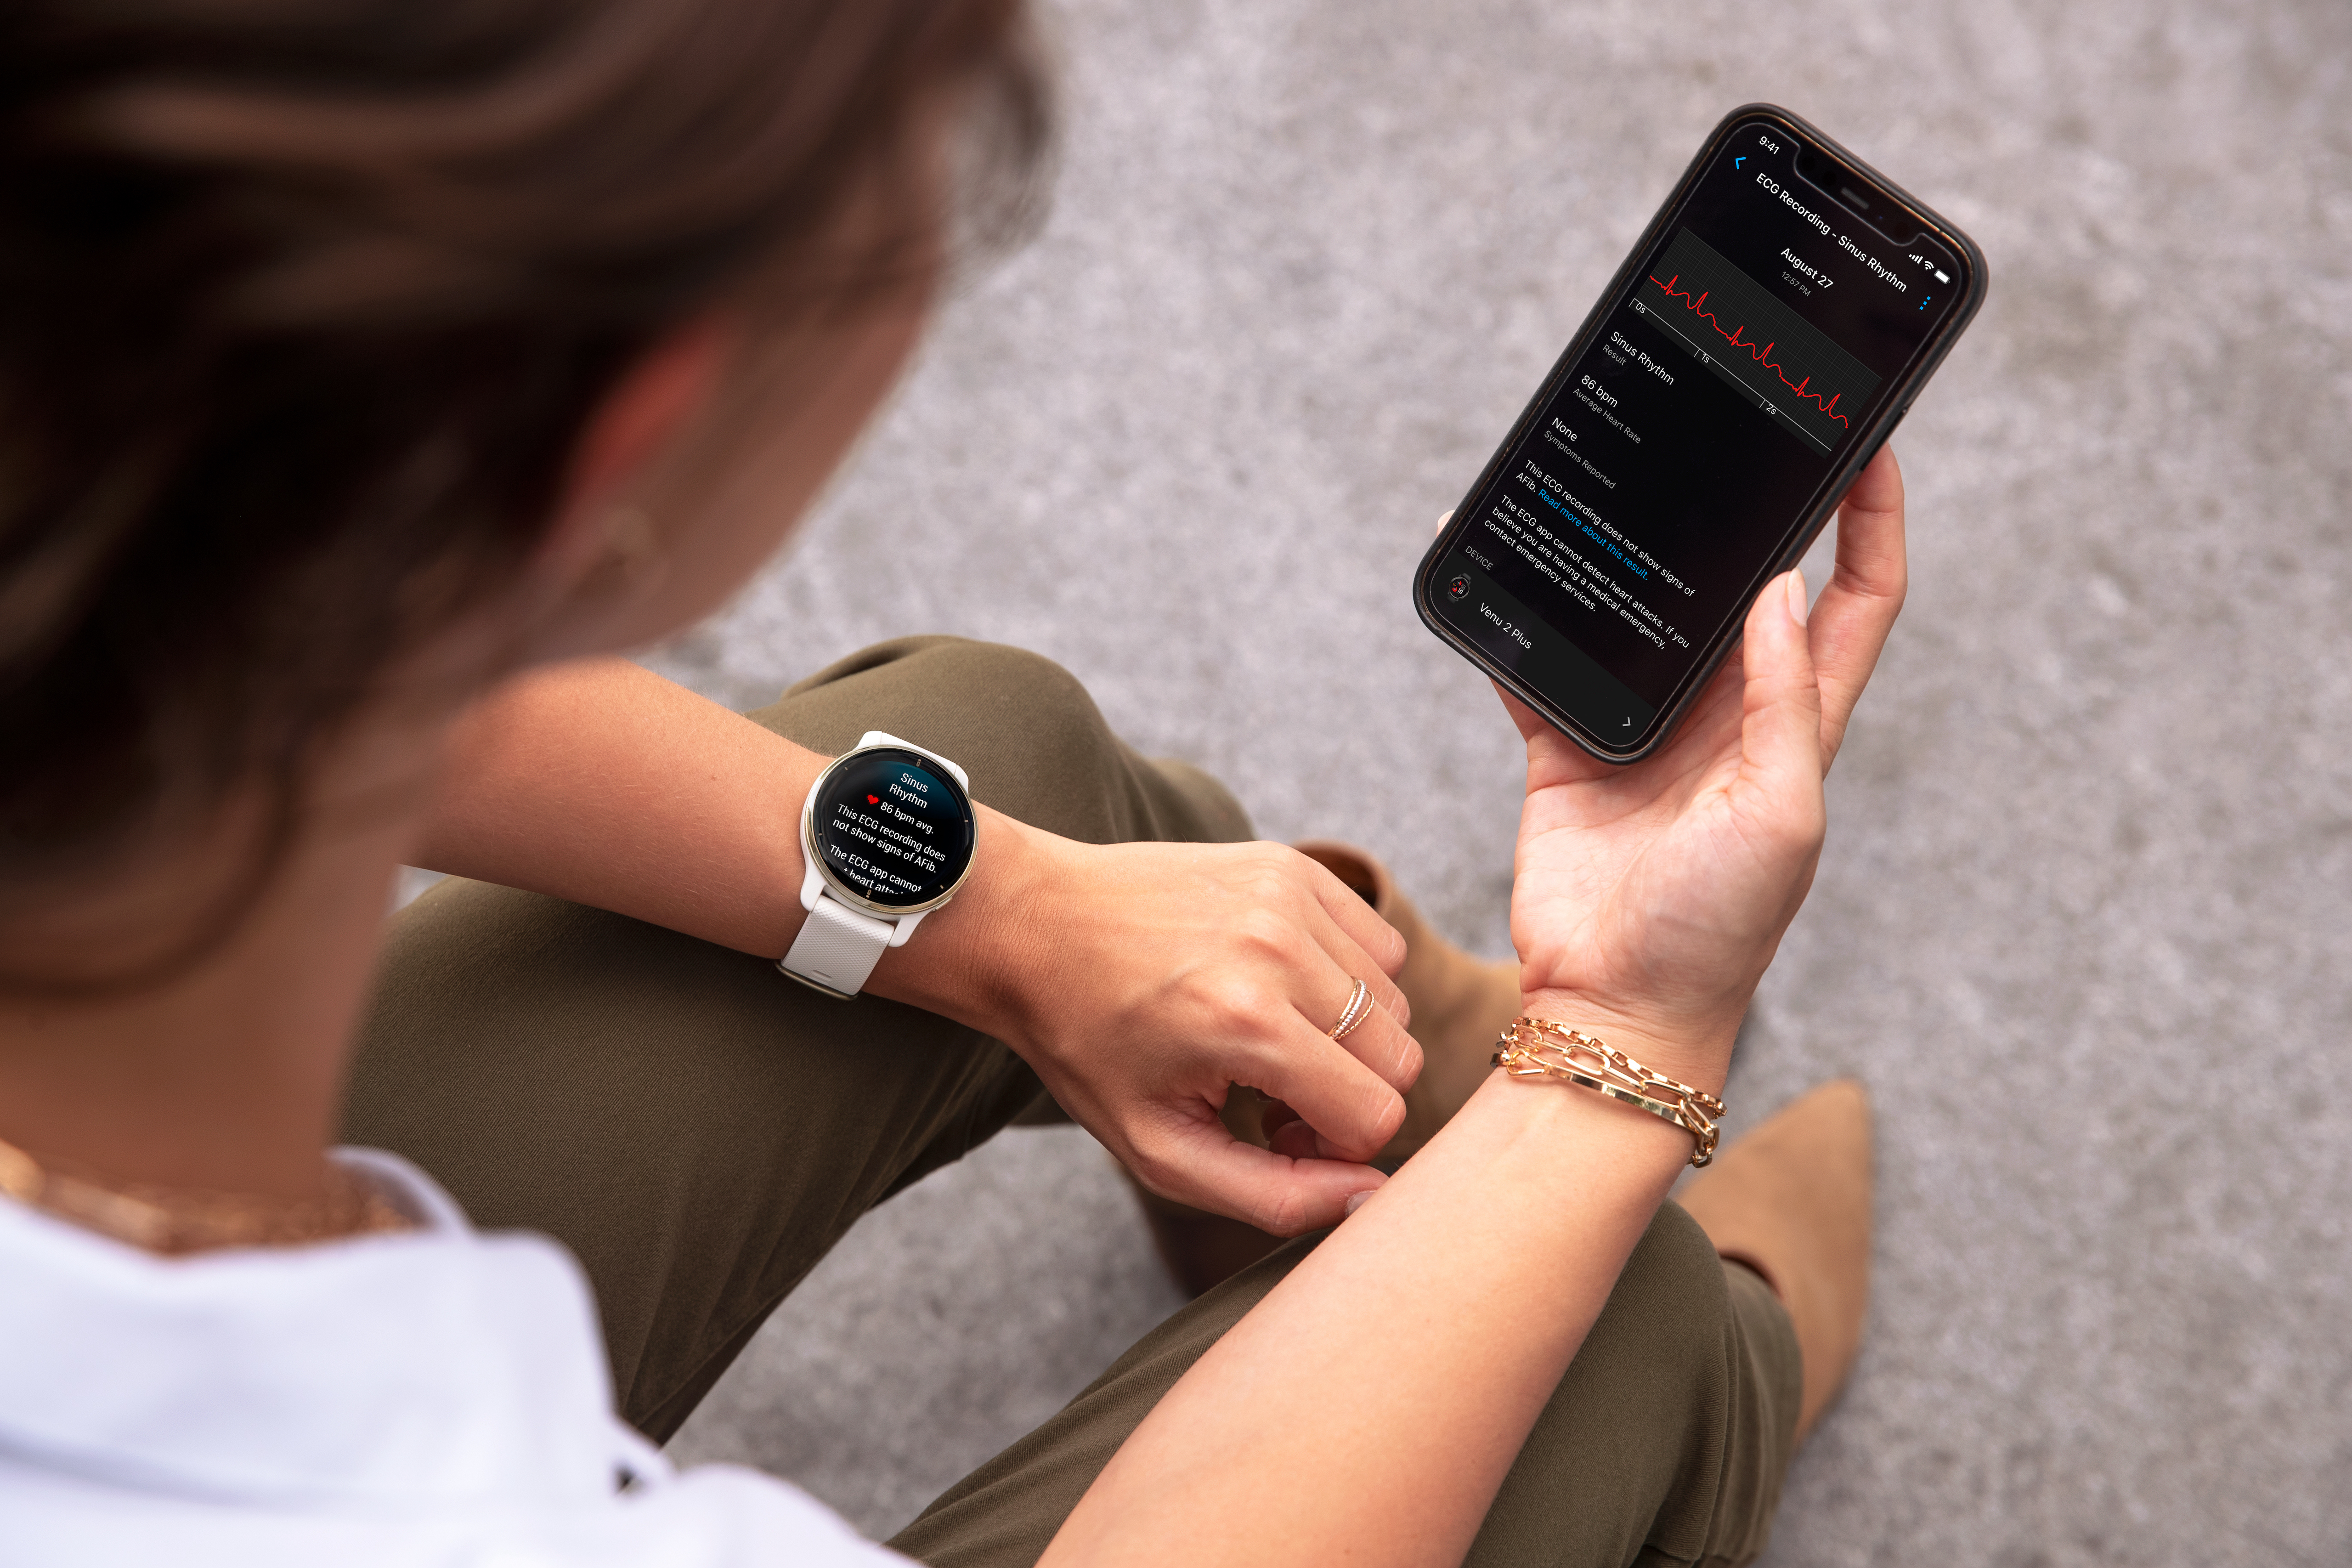 Garmin Venu 2 Plus review: The first real Garmin smartwatch